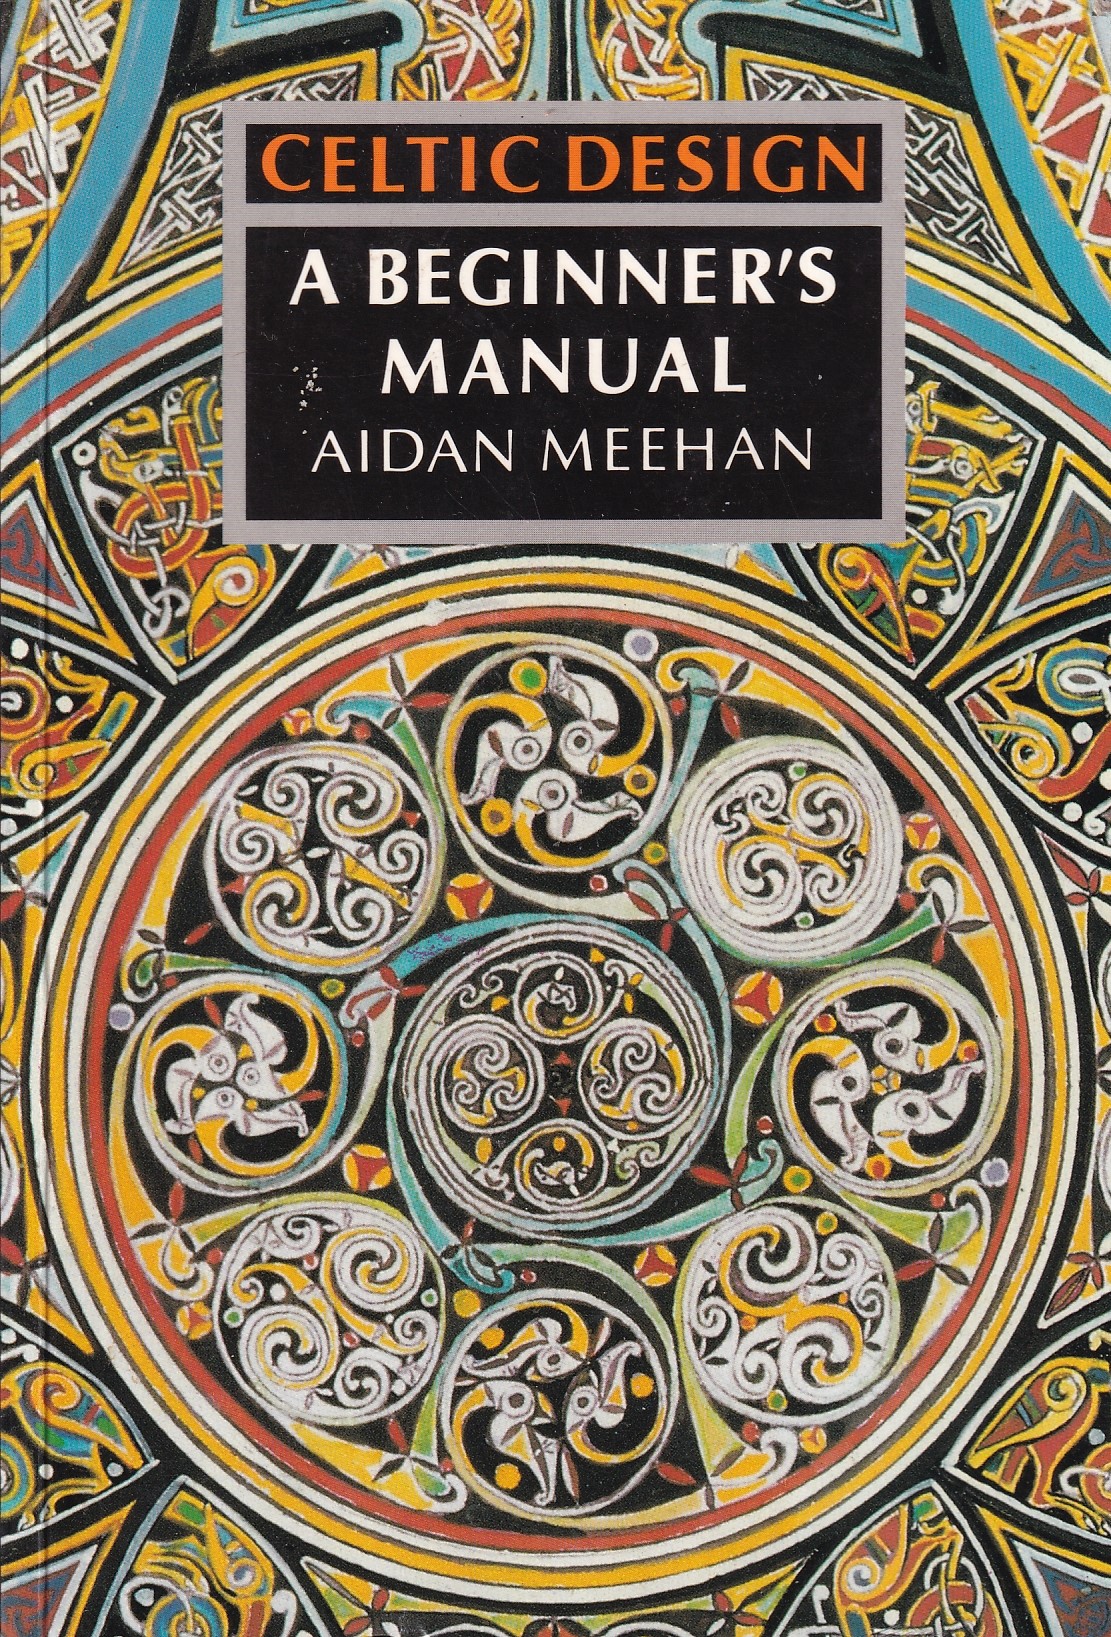 Celtic Design: A Beginner’s Manual | Aidan Meehan | Charlie Byrne's